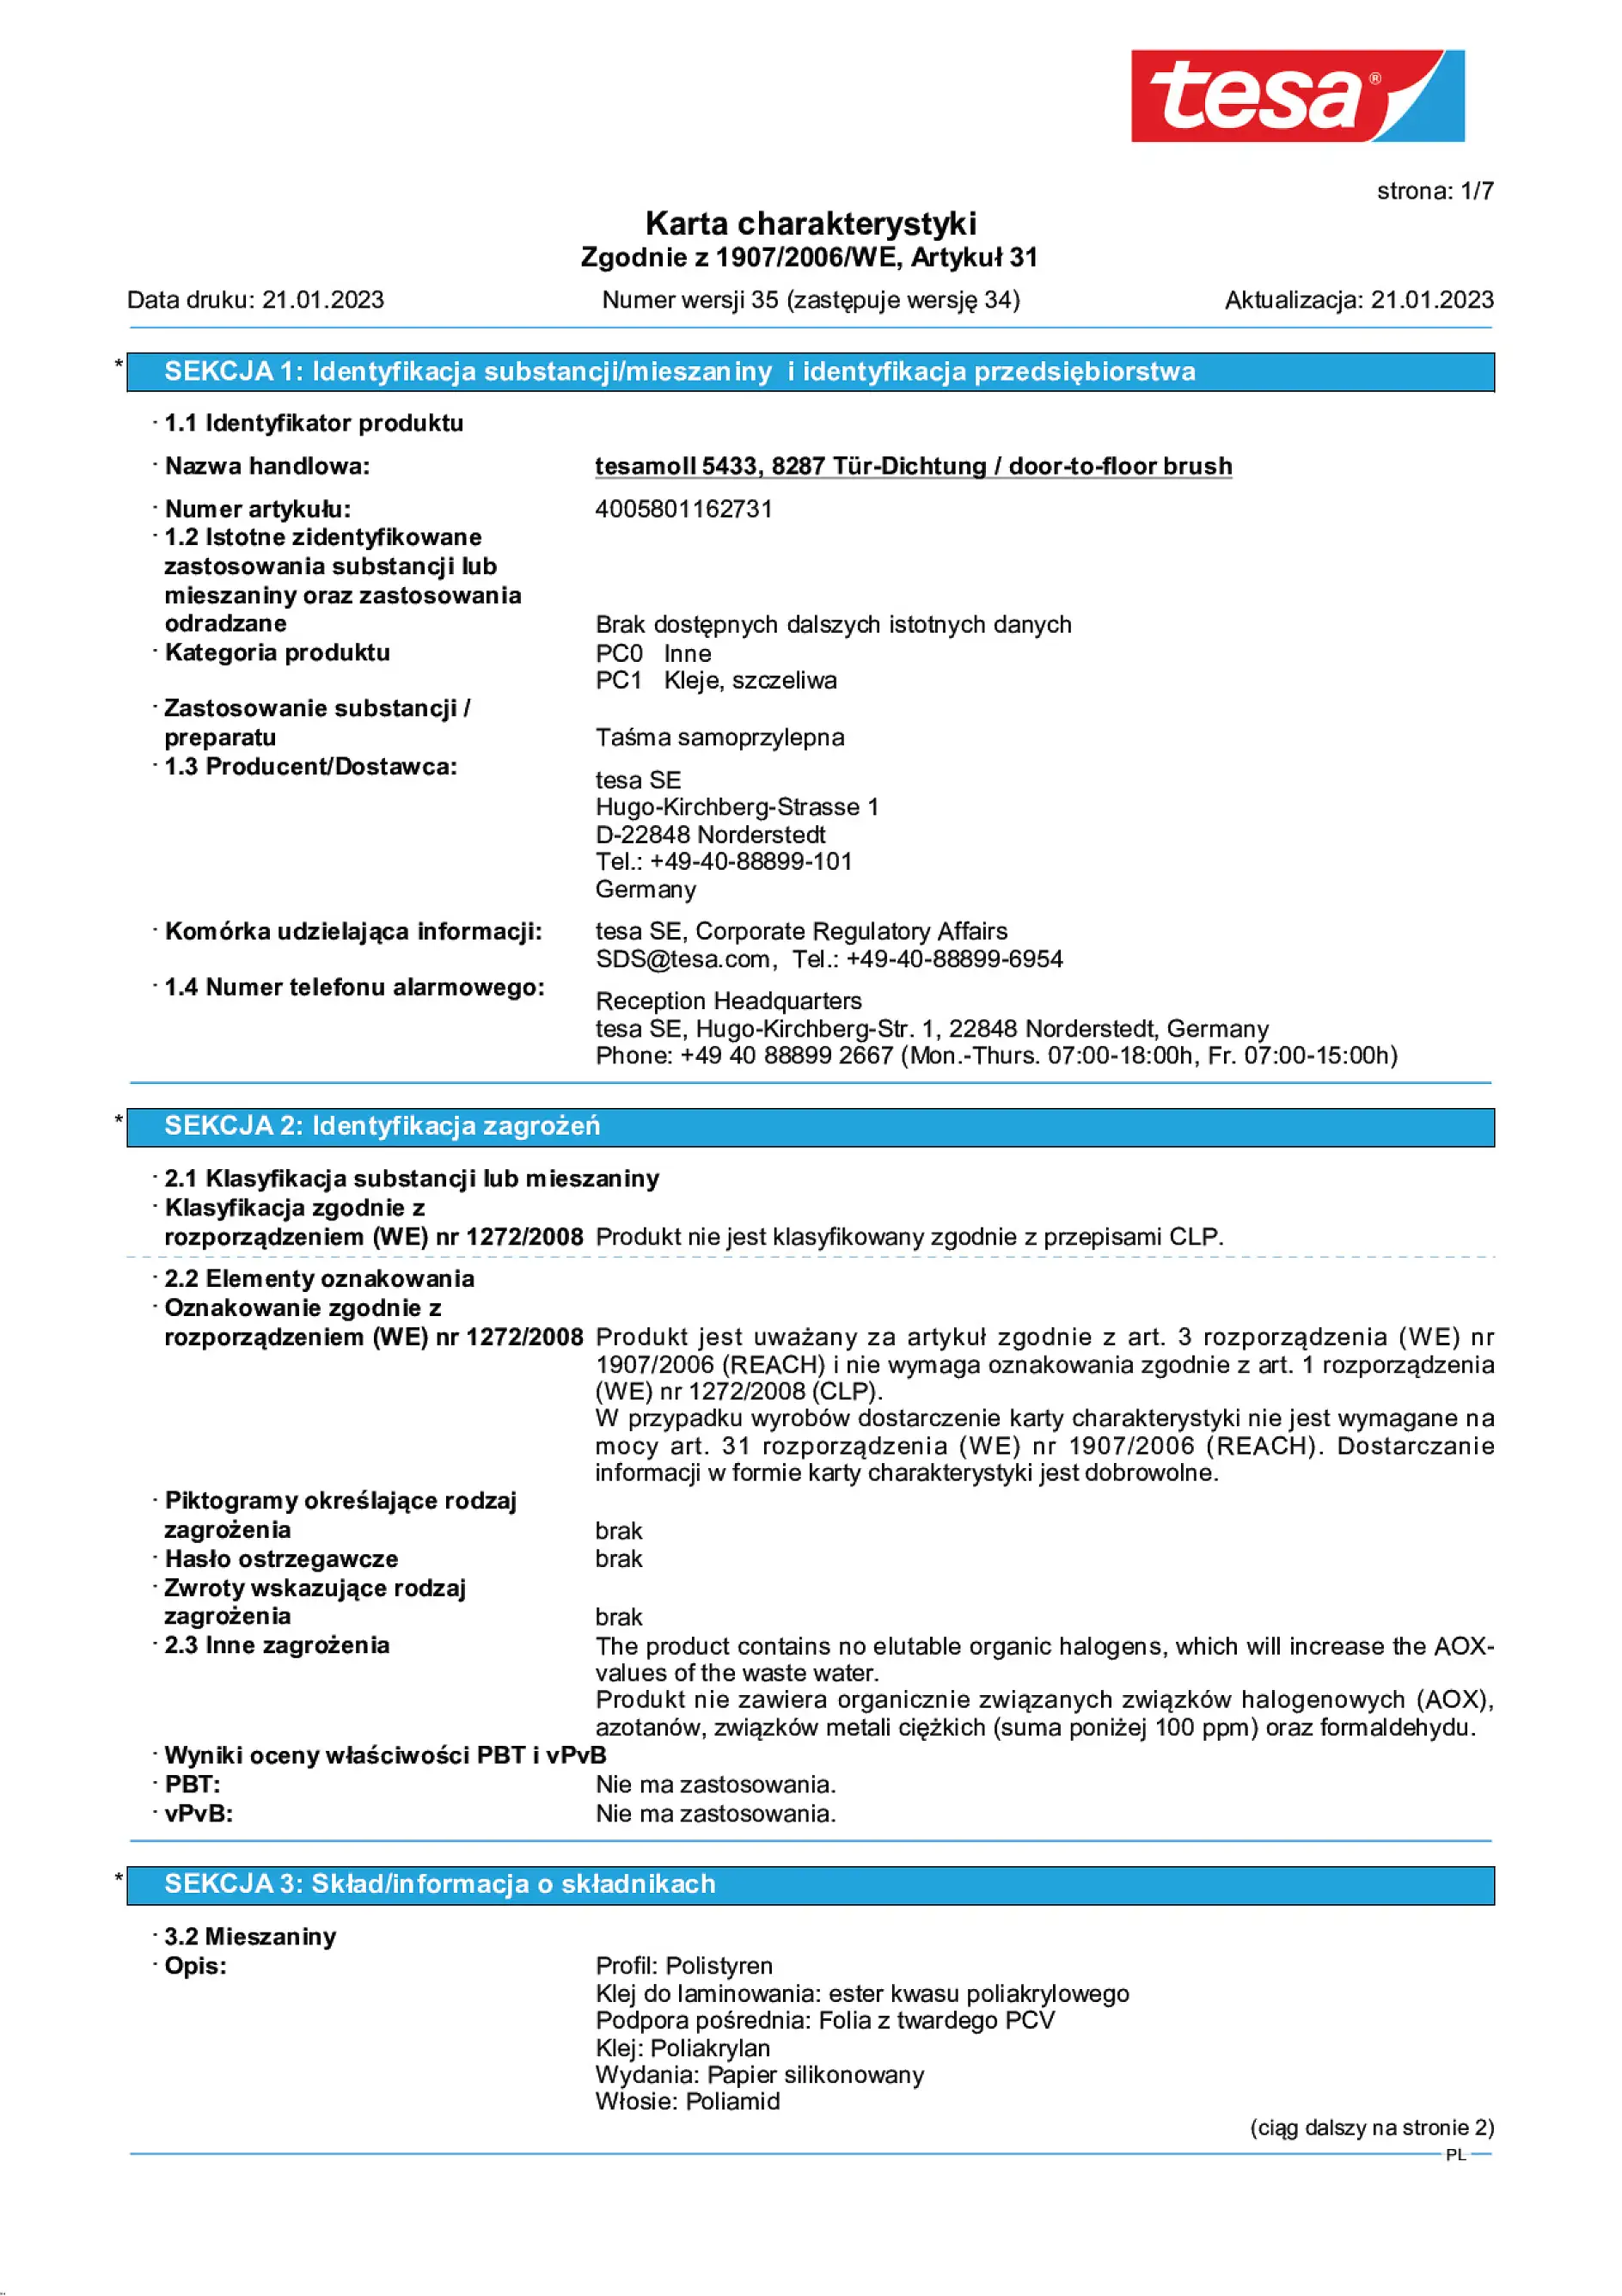 Safety data sheet_tesamoll® 05433_pl-PL_v35